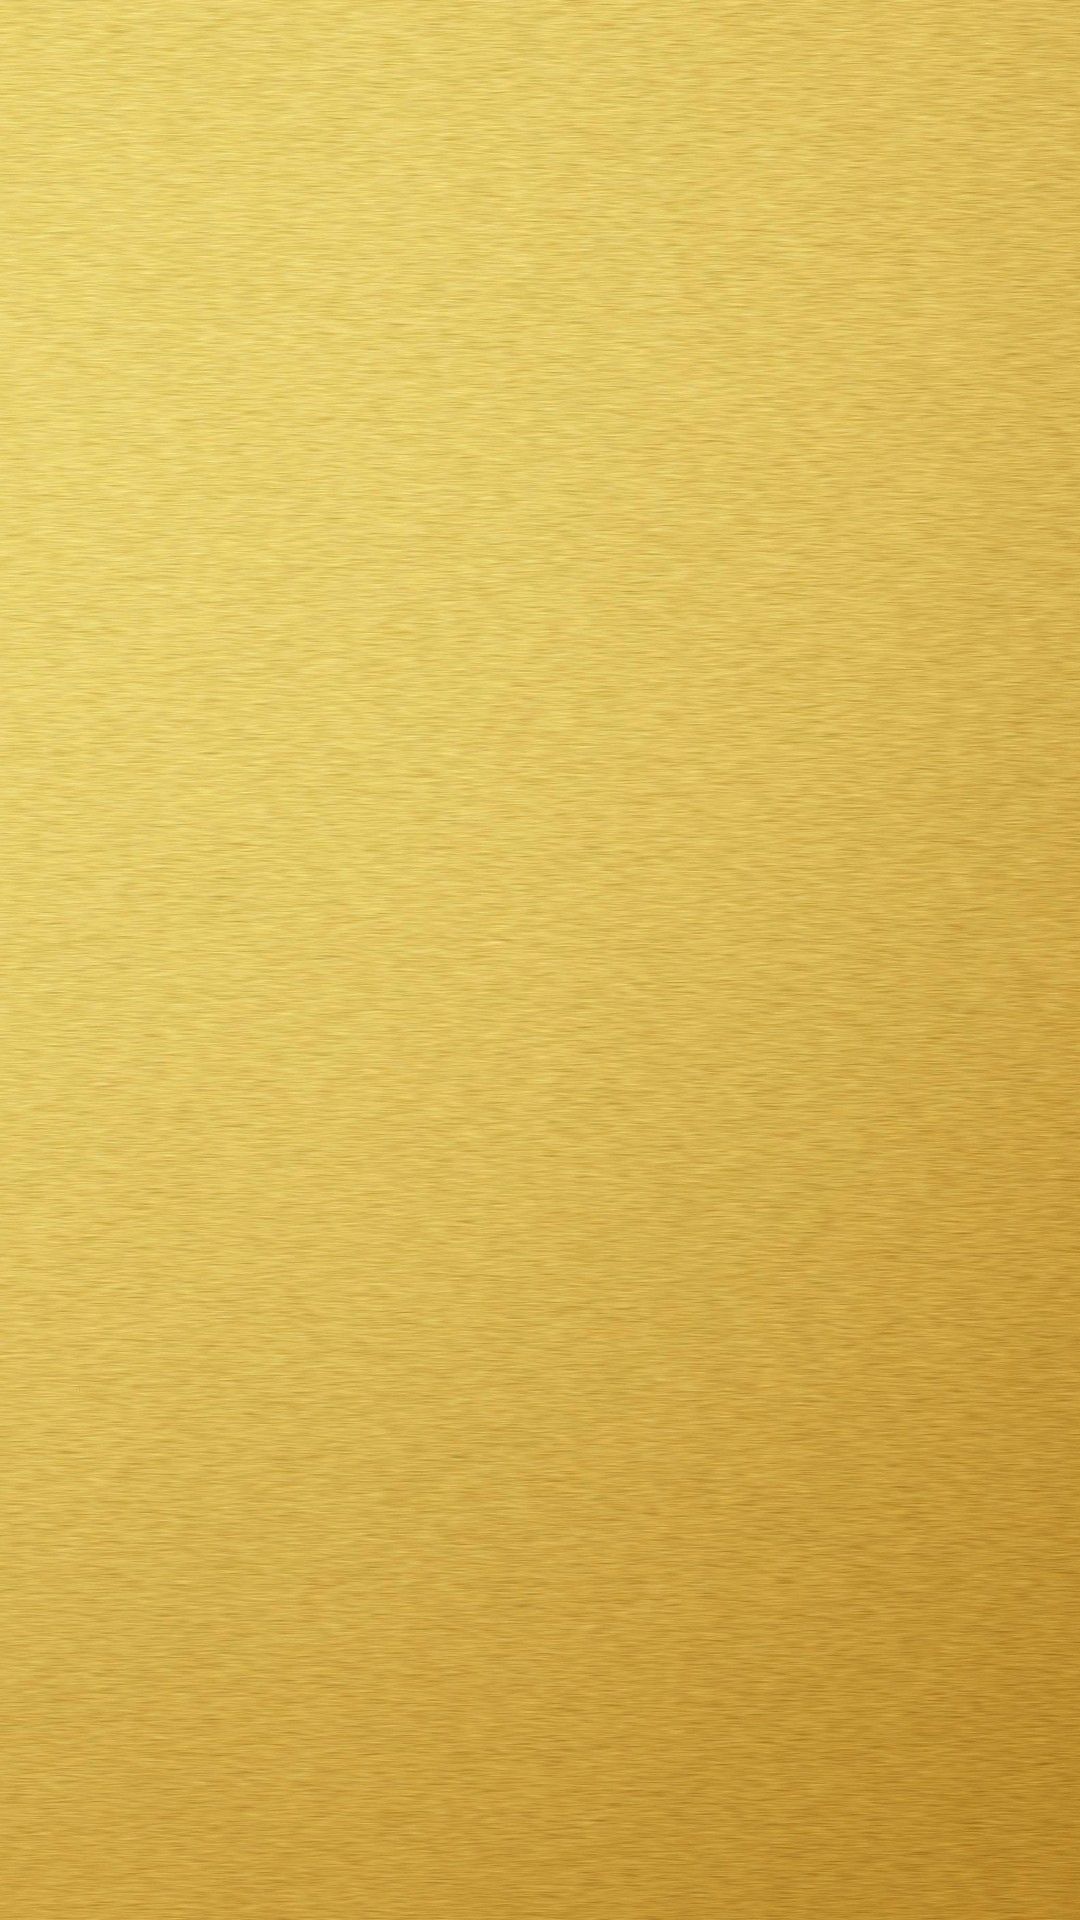 24 Carat Gold Wallpapers - Wallpaper Cave